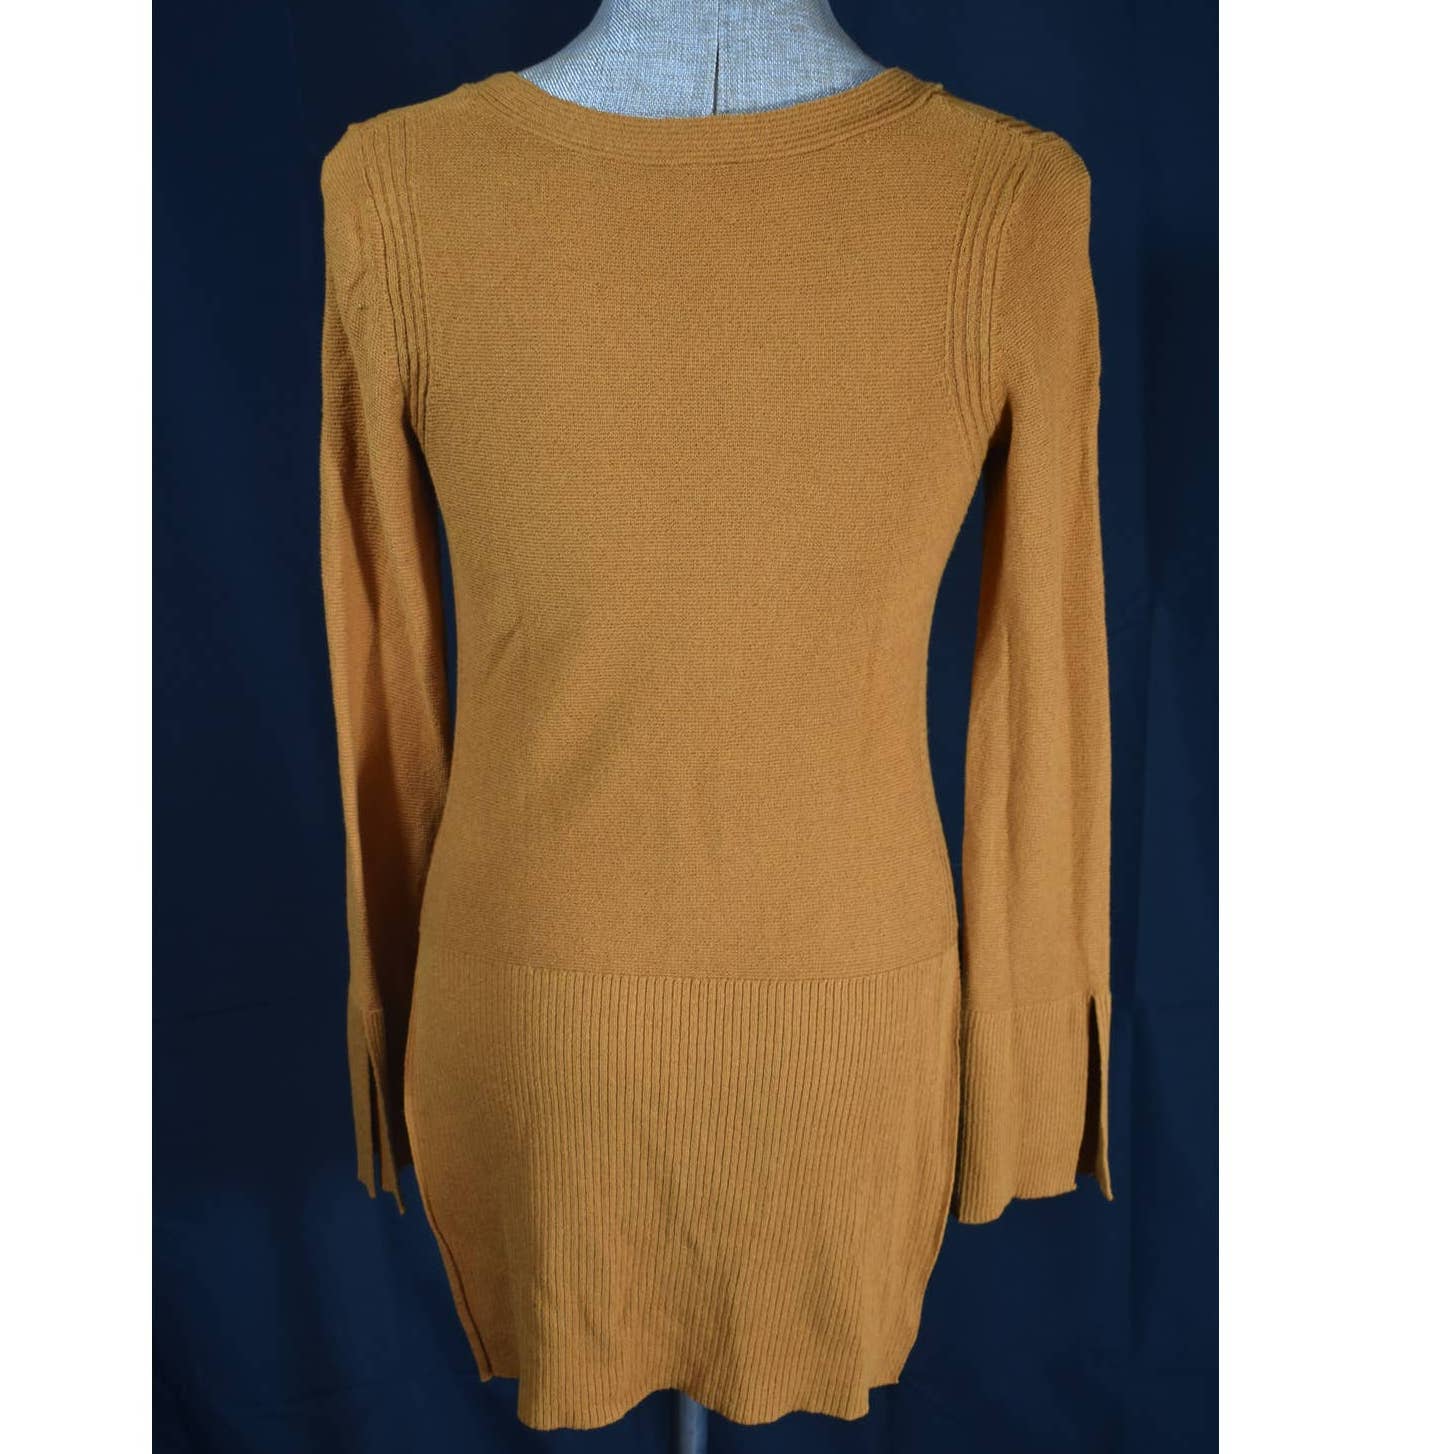 Free People Harvest Orange Long Tunic Sweater - XS